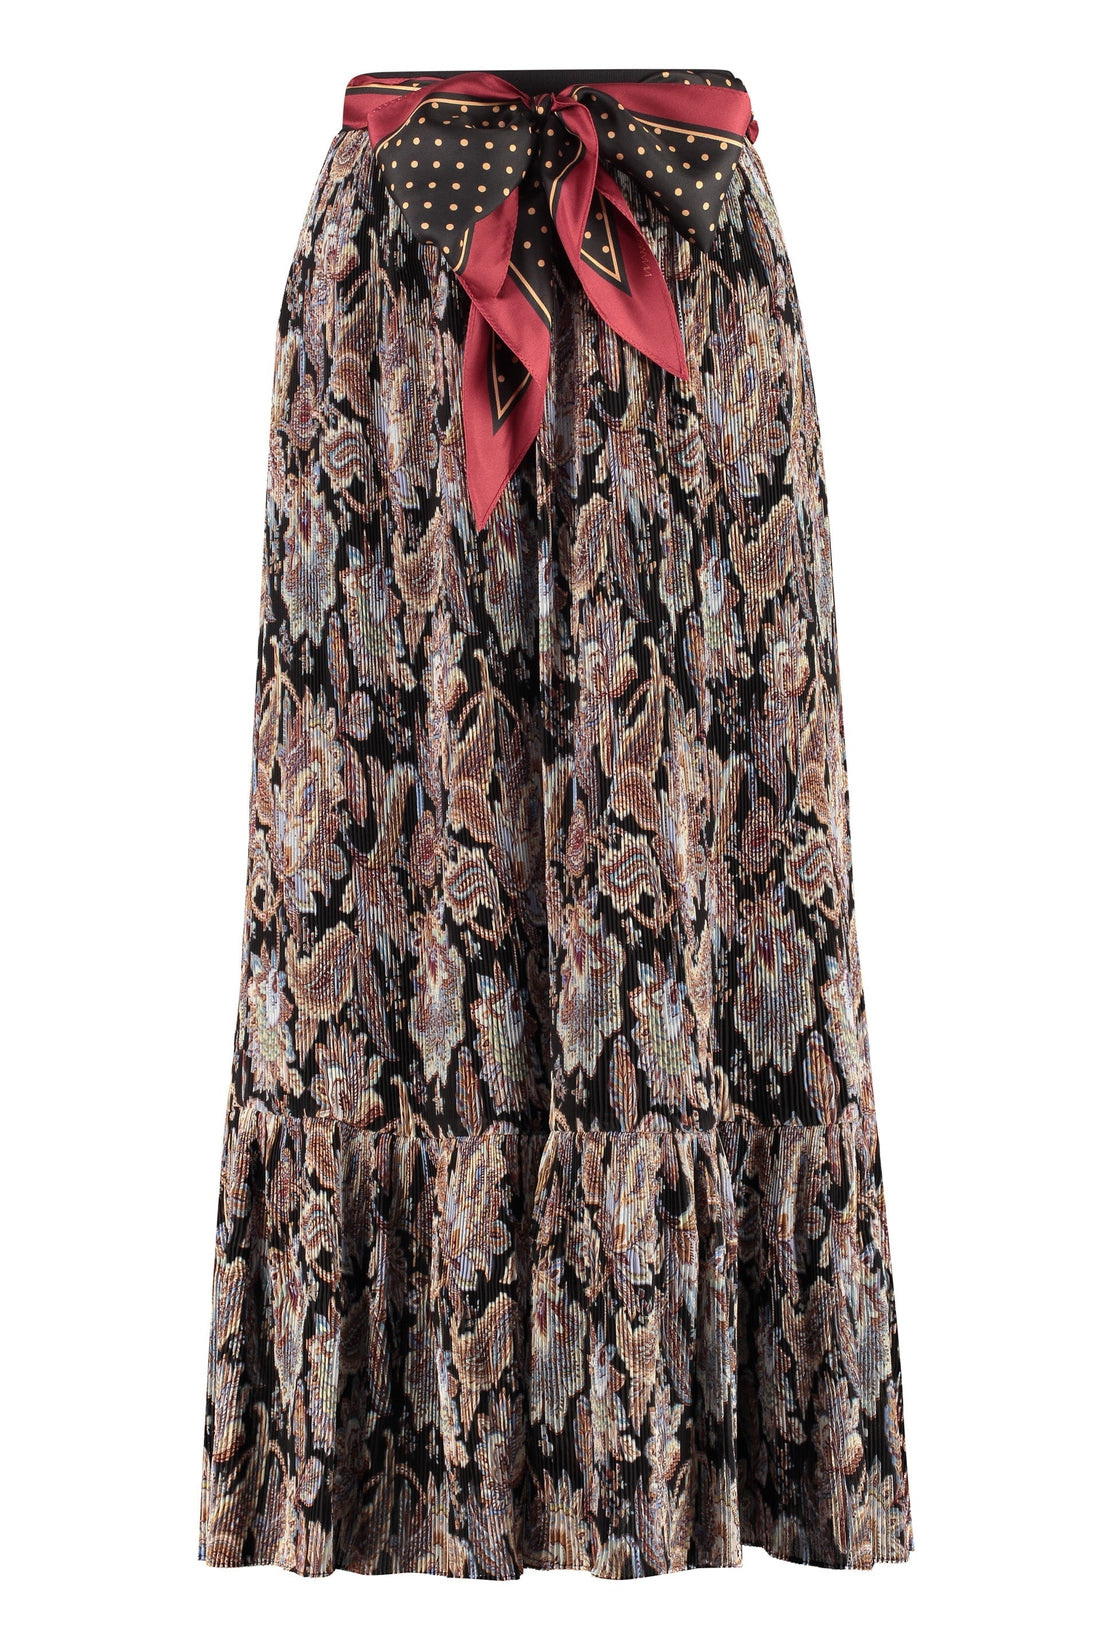 Zimmermann-OUTLET-SALE-Ladybeetle printed pleated skirt-ARCHIVIST